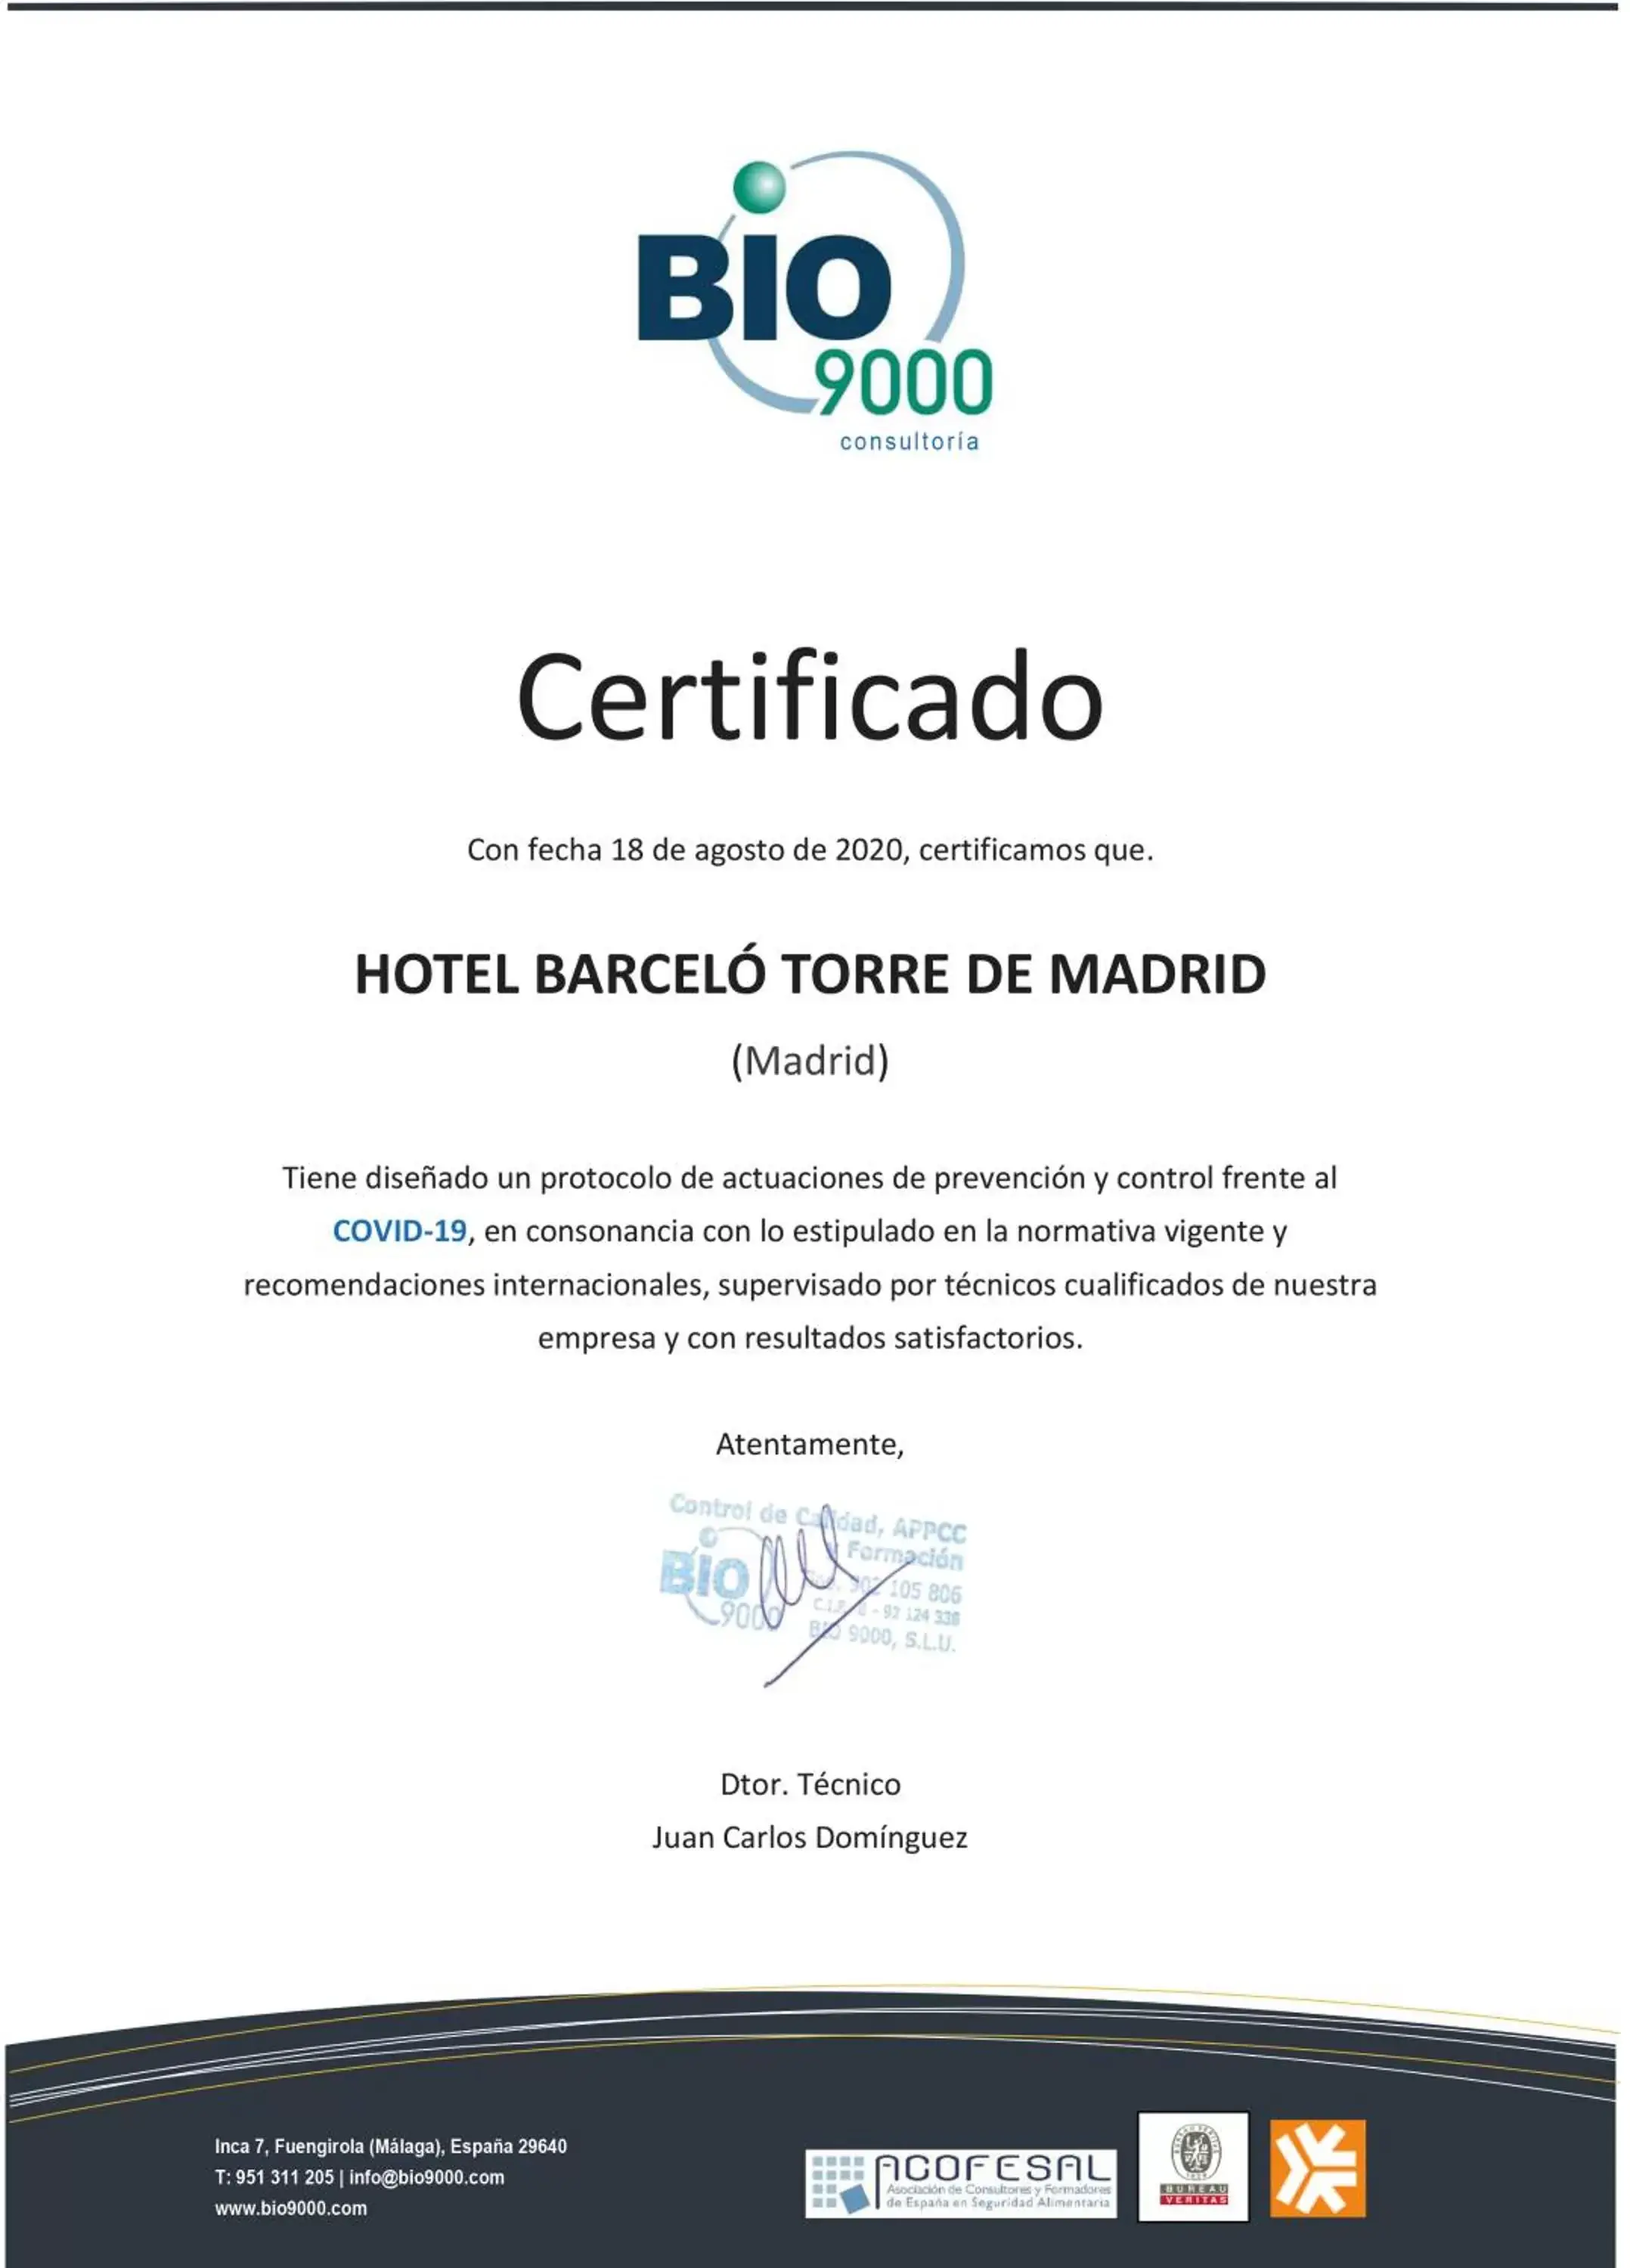 Certificate/Award in Barceló Torre de Madrid